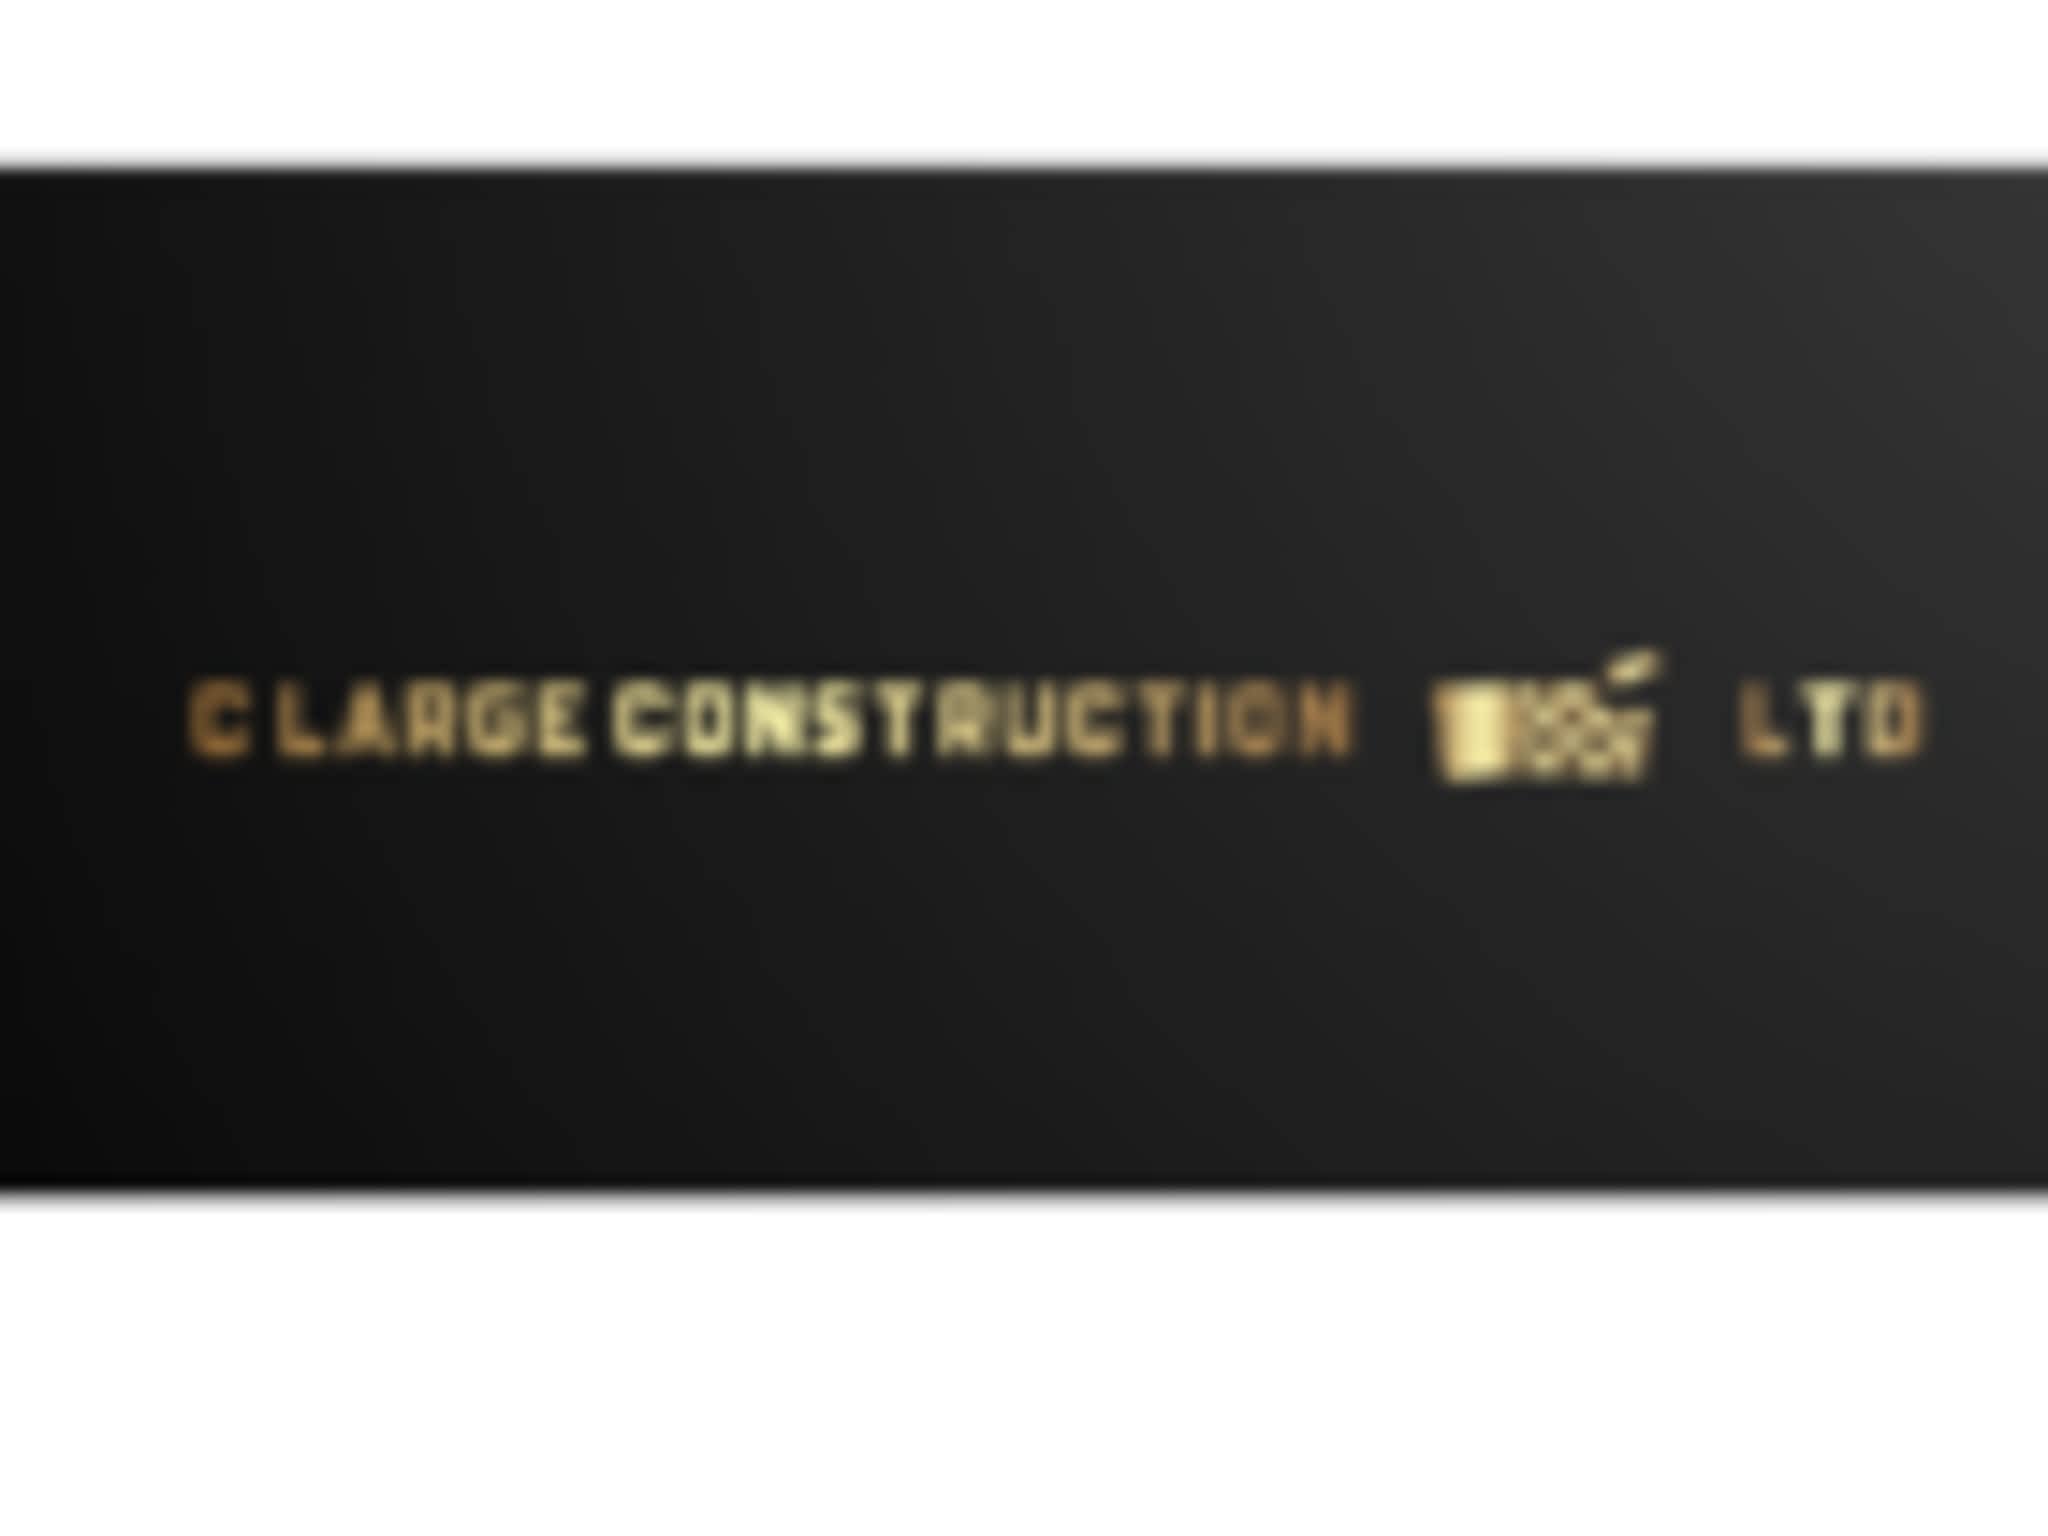 photo C Large Construction Ltd